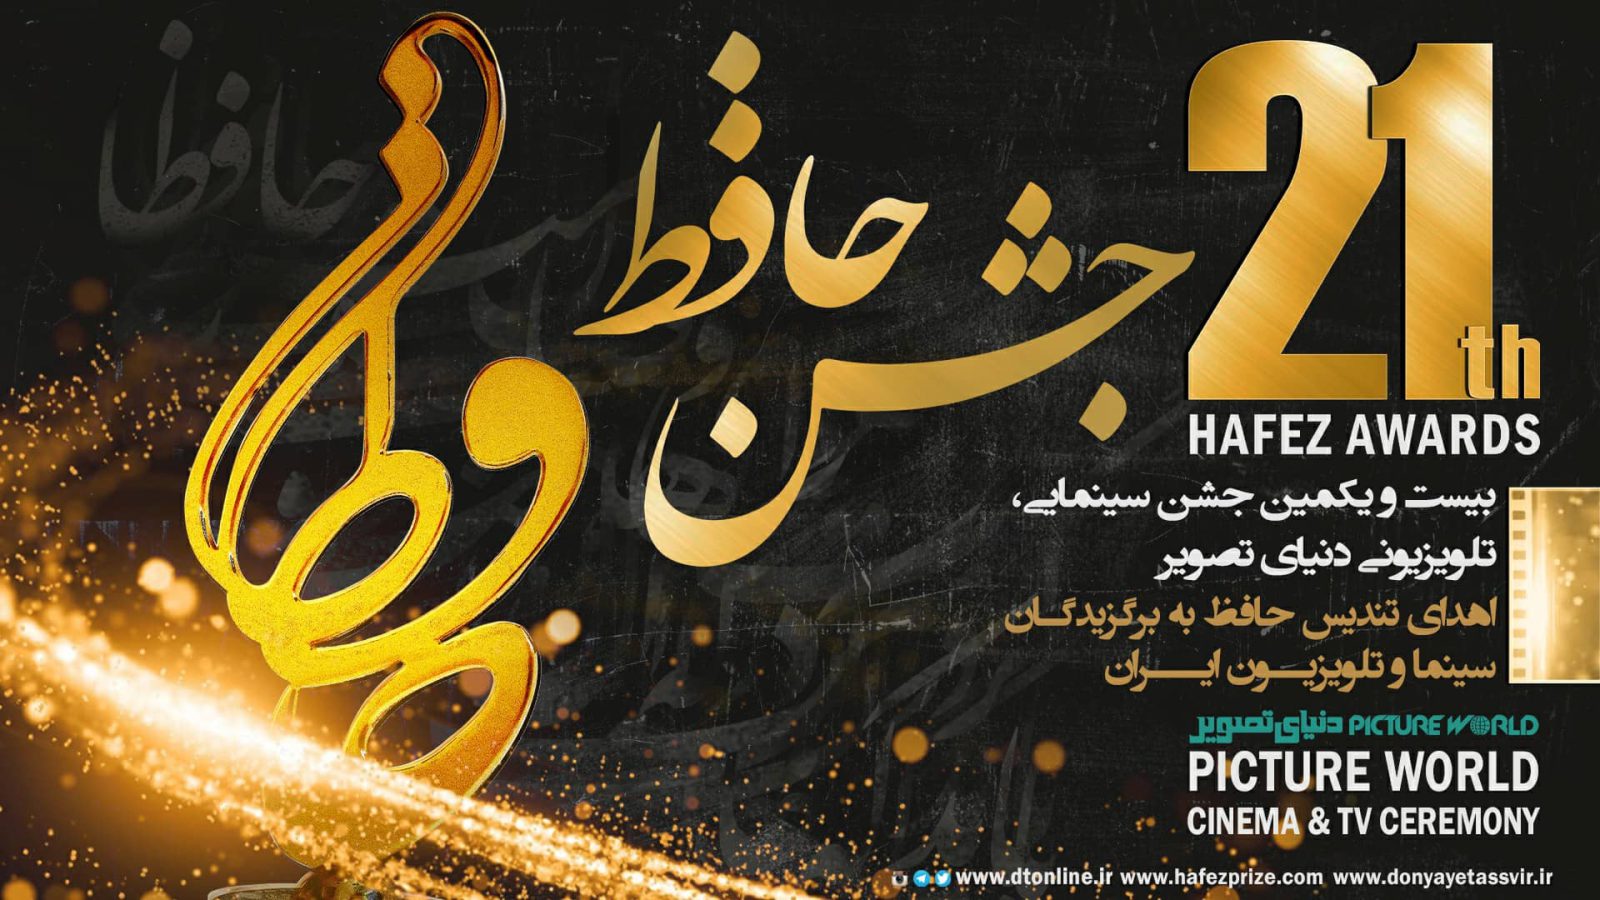 21st Hafez Awards 2021